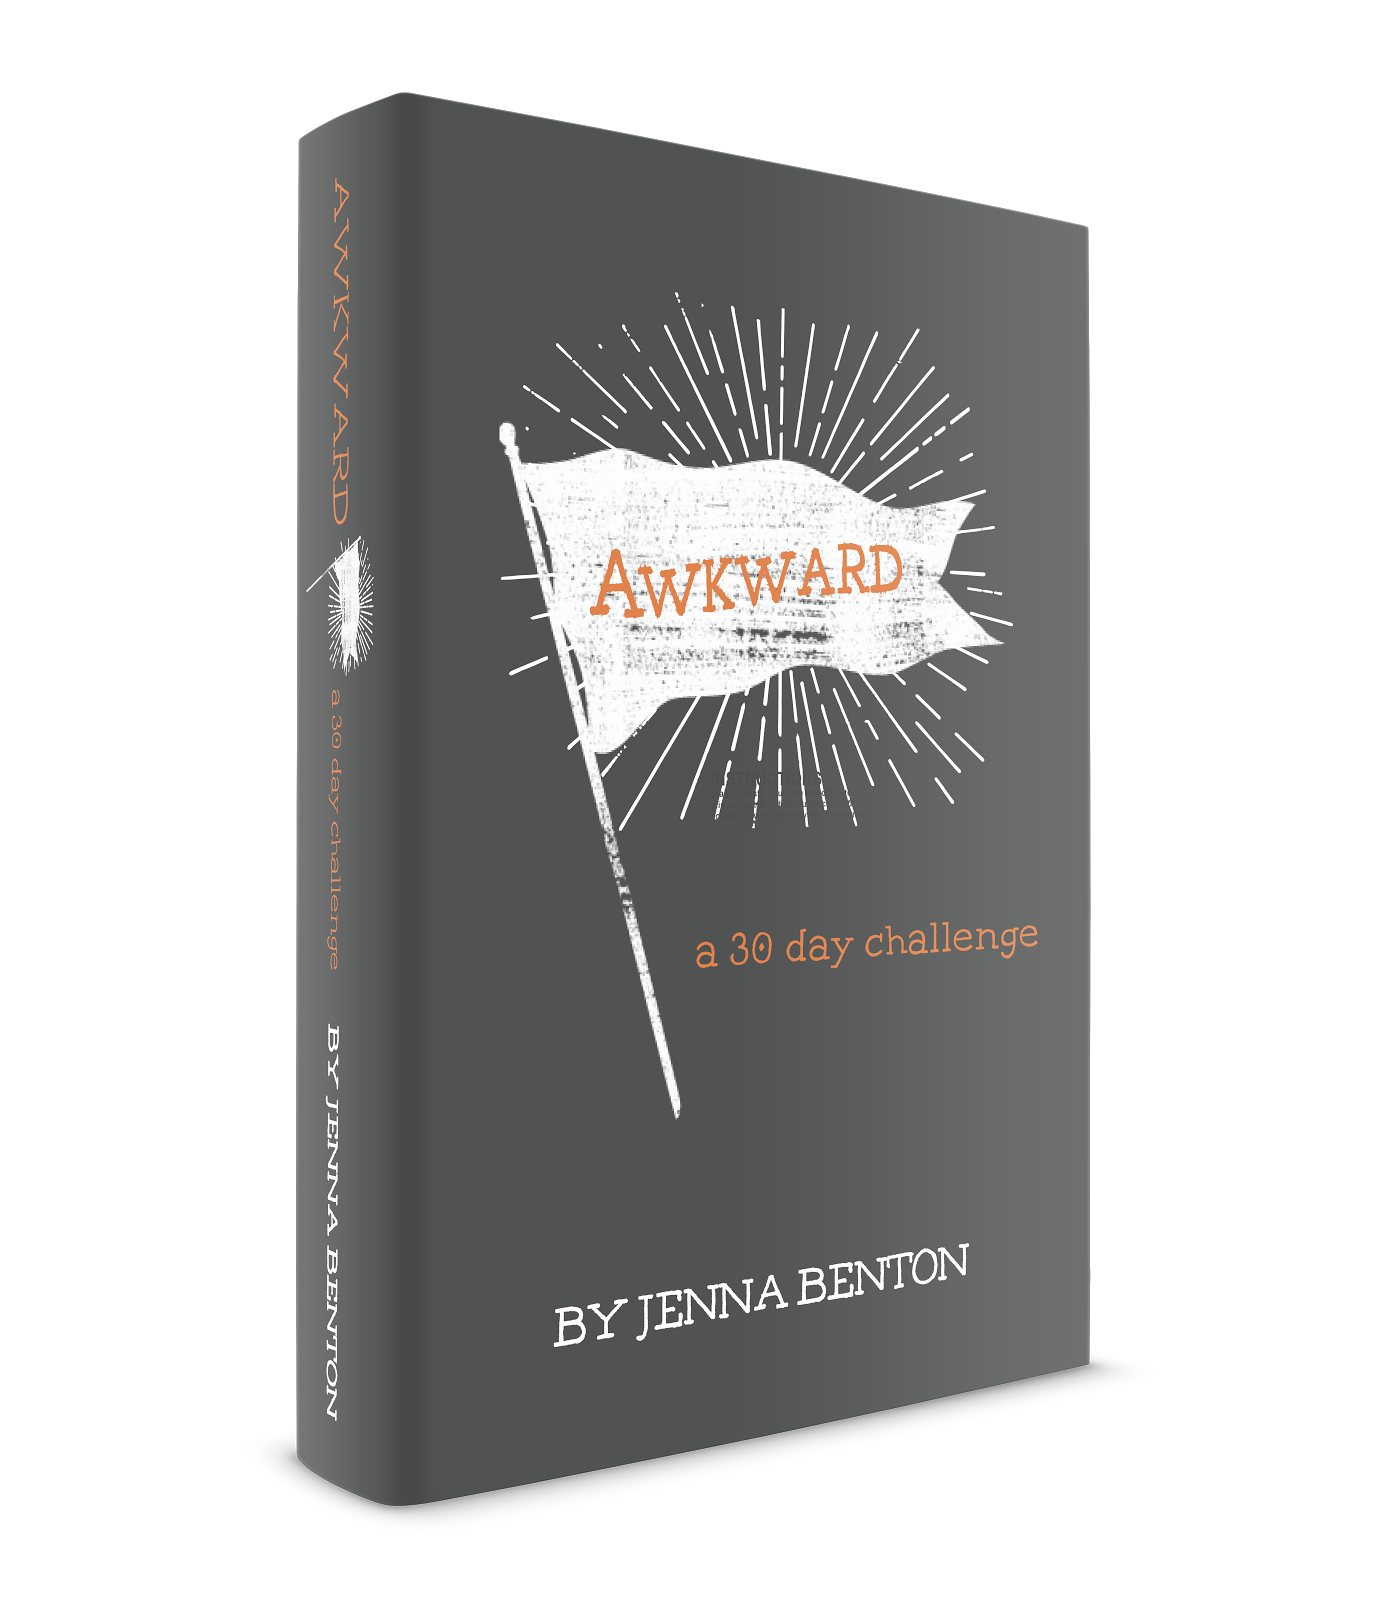 AWKWARD: a 30 day challenge